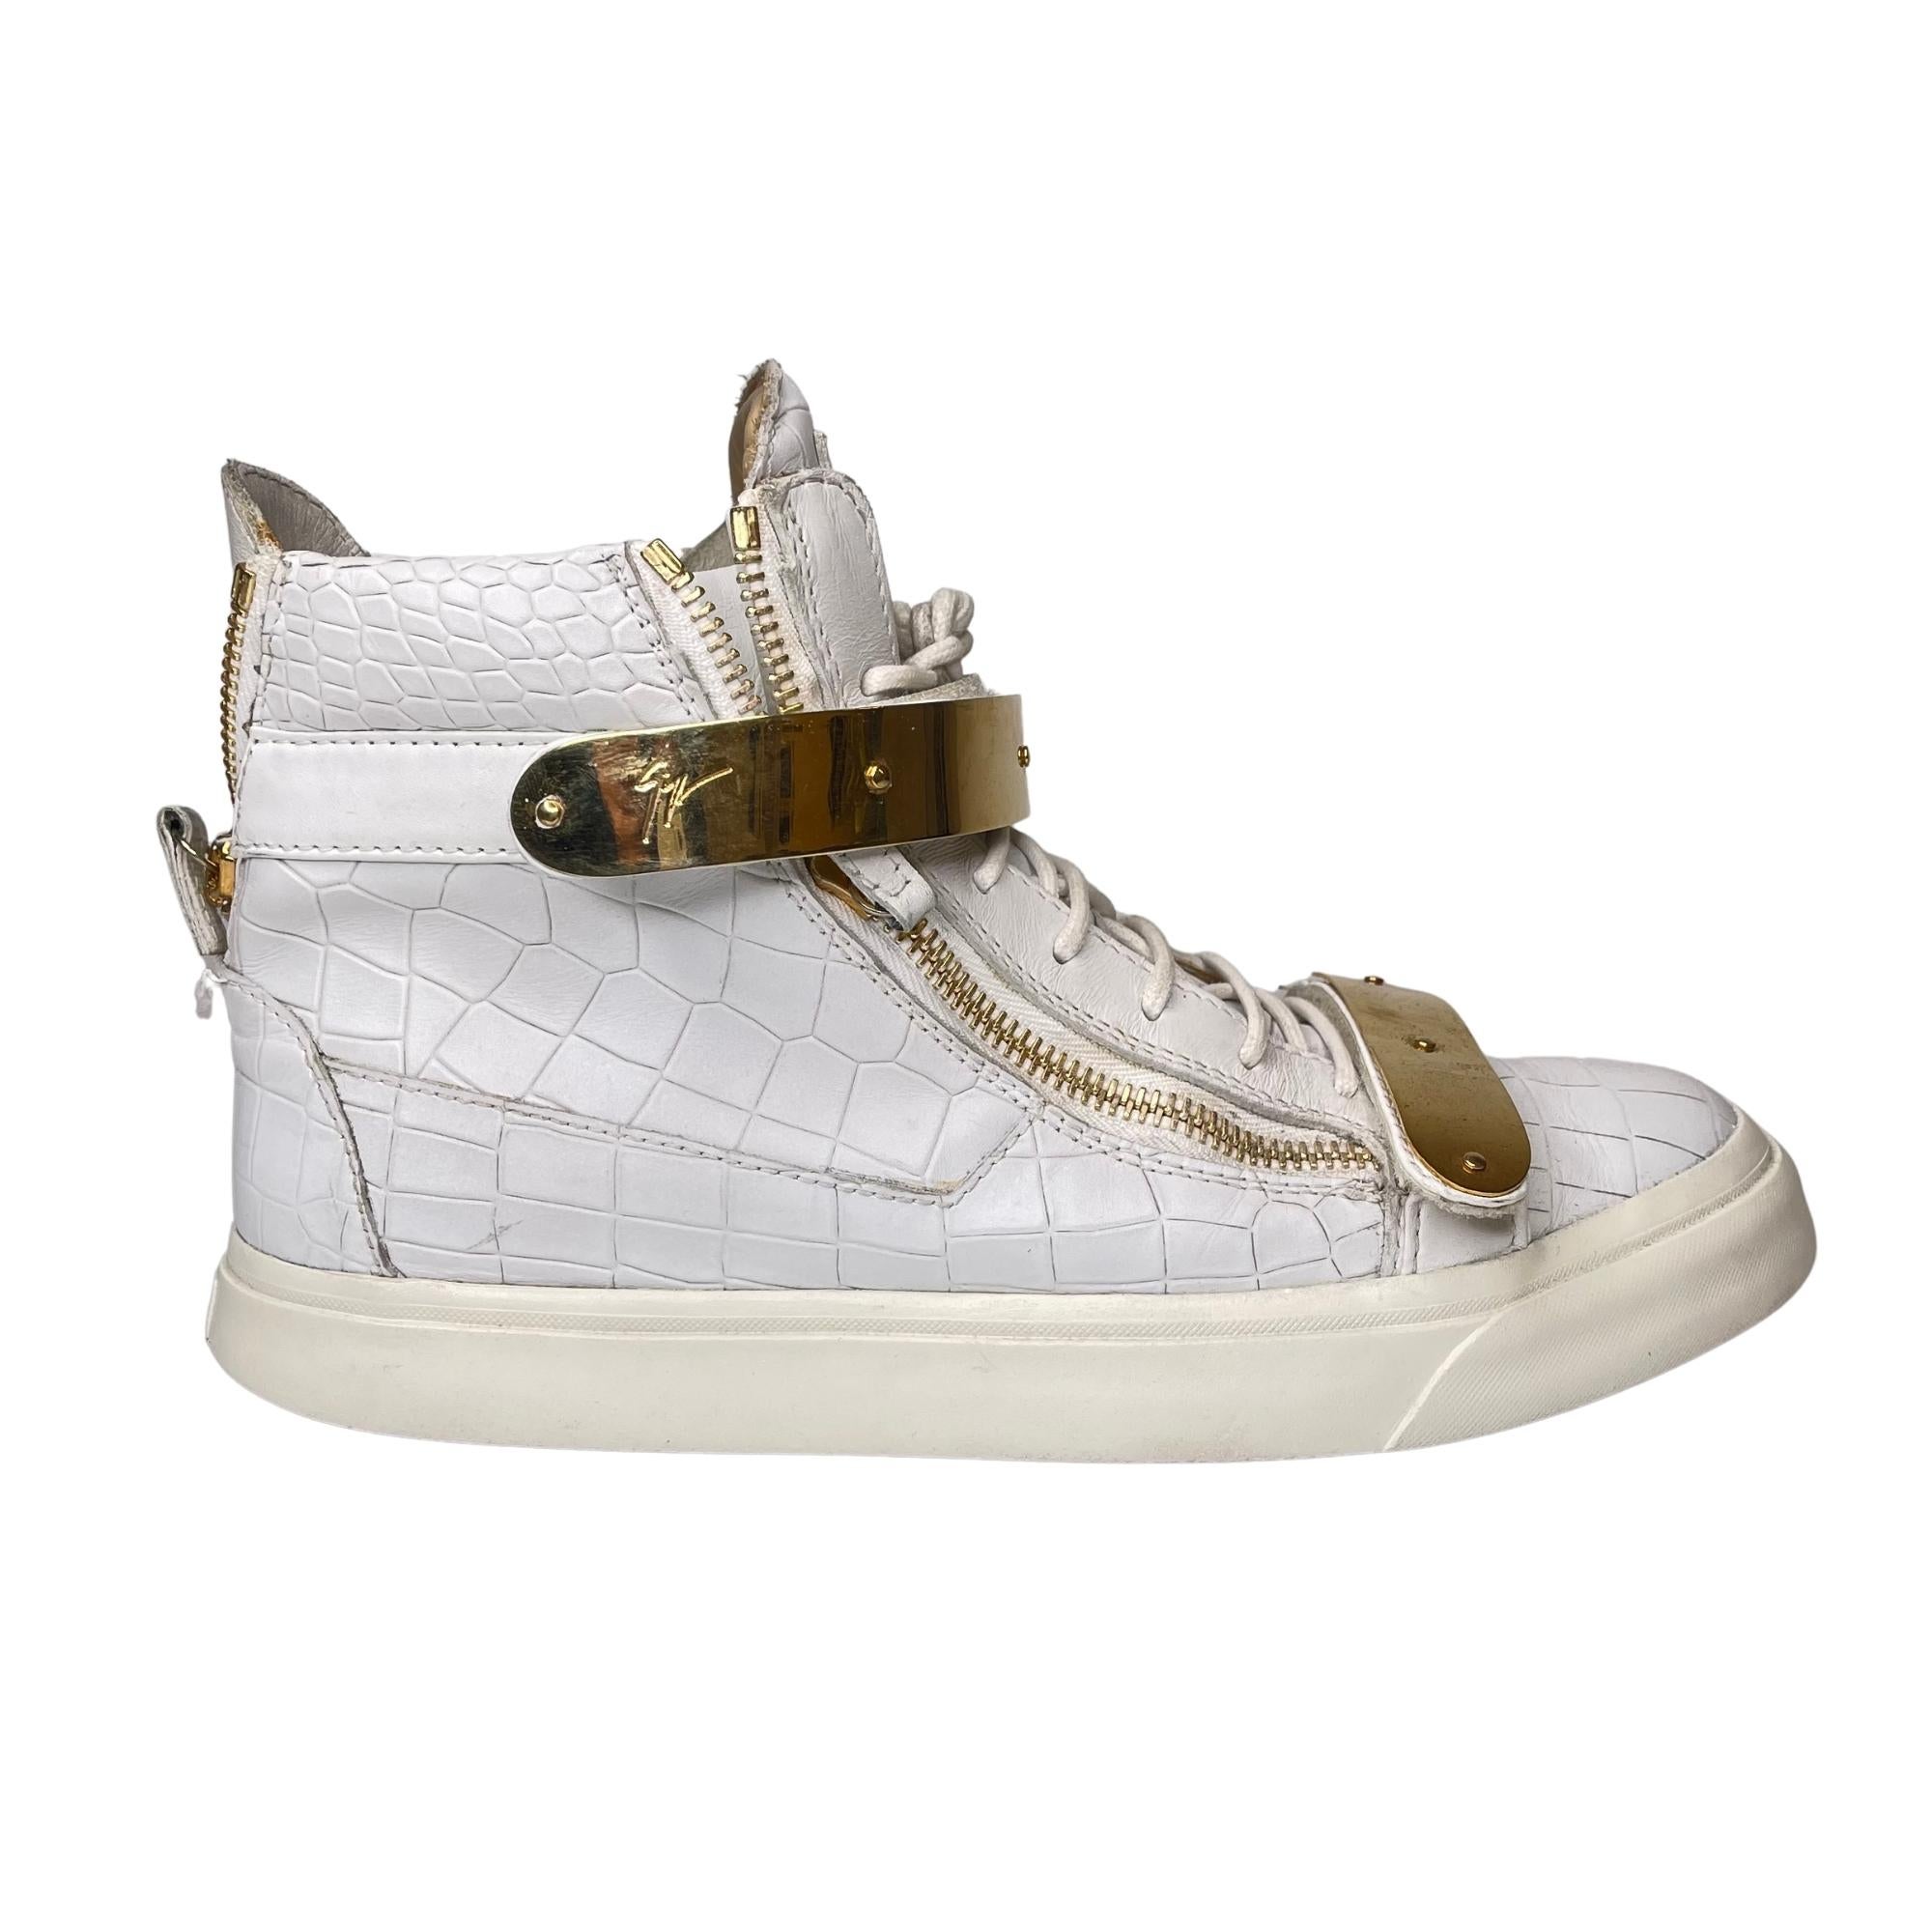 Giuseppe Zanotti Coby High Top Sneakers aus weißem Leder mit Krokodilleder-Prägung (44 EU)